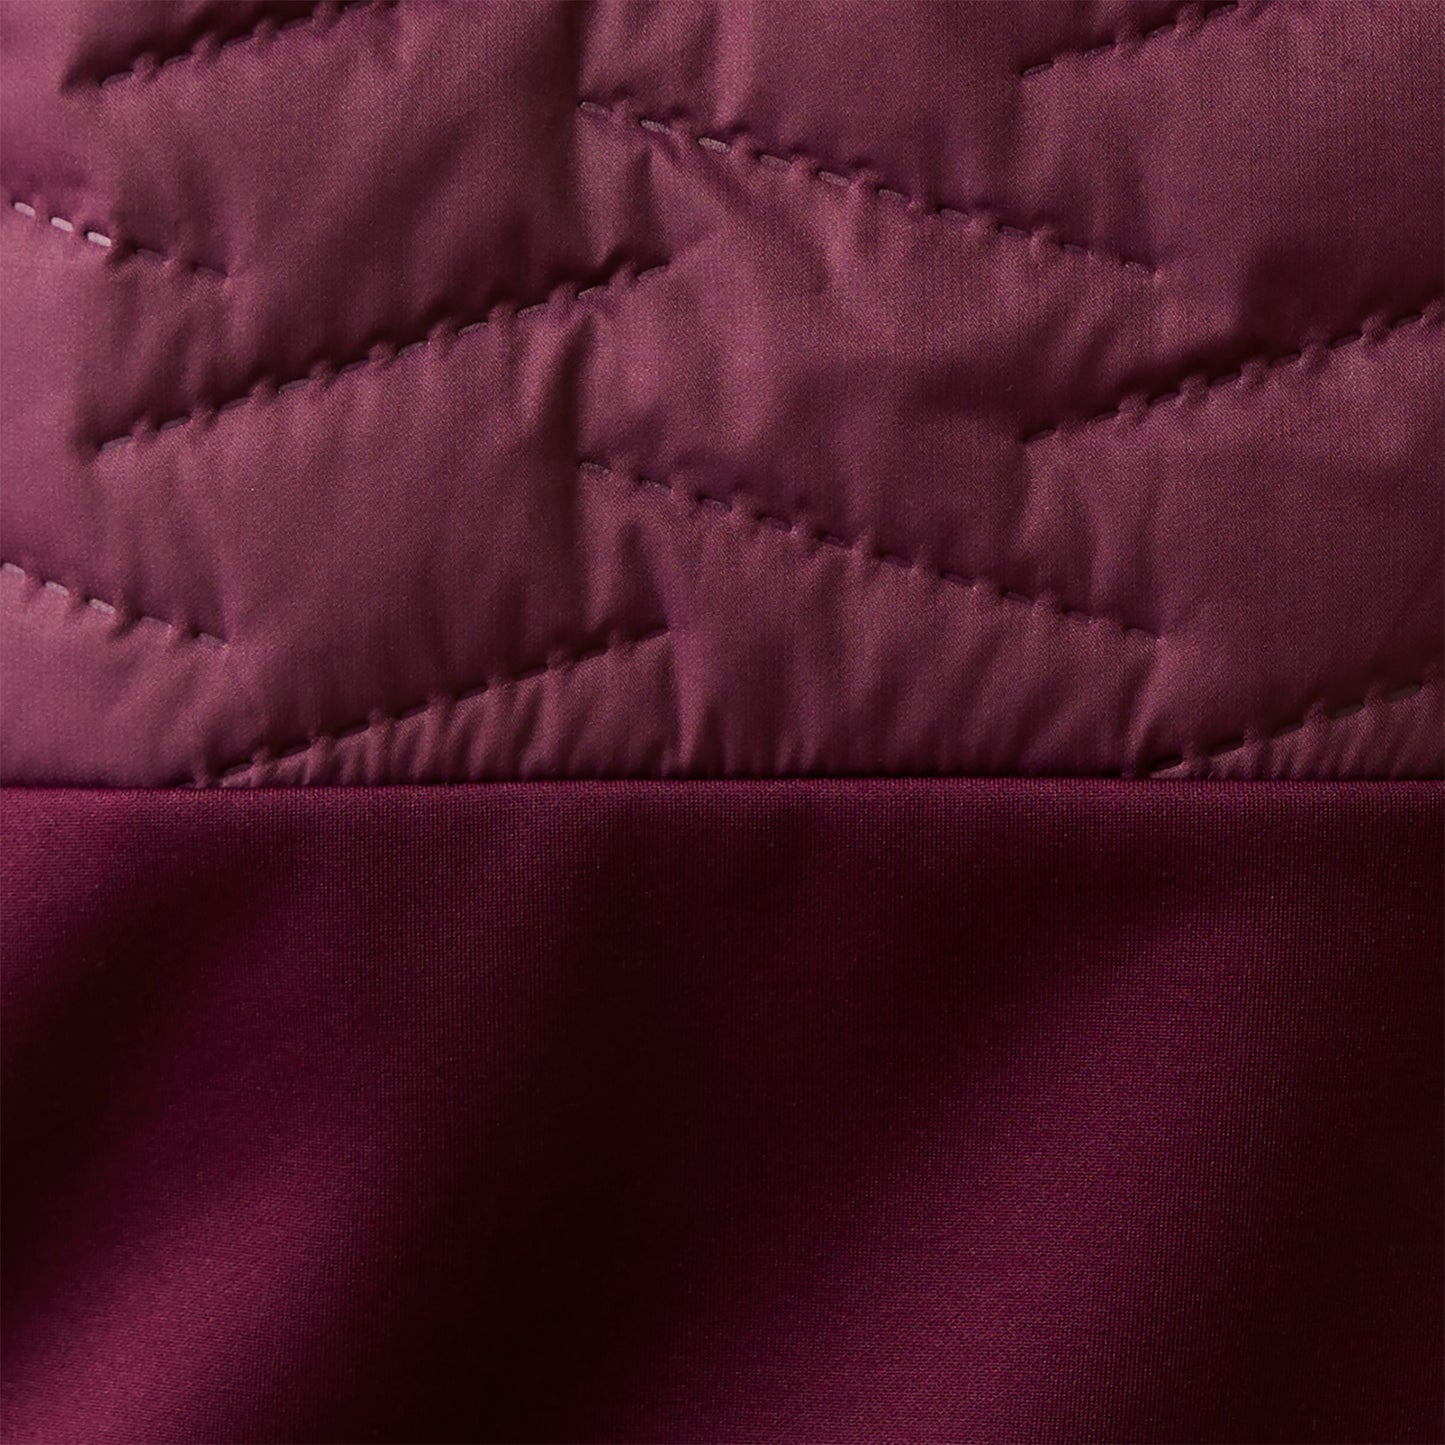 Ariat Ladies Rebar Cloud 9 Insulated Potent Purple Jacket 10046573